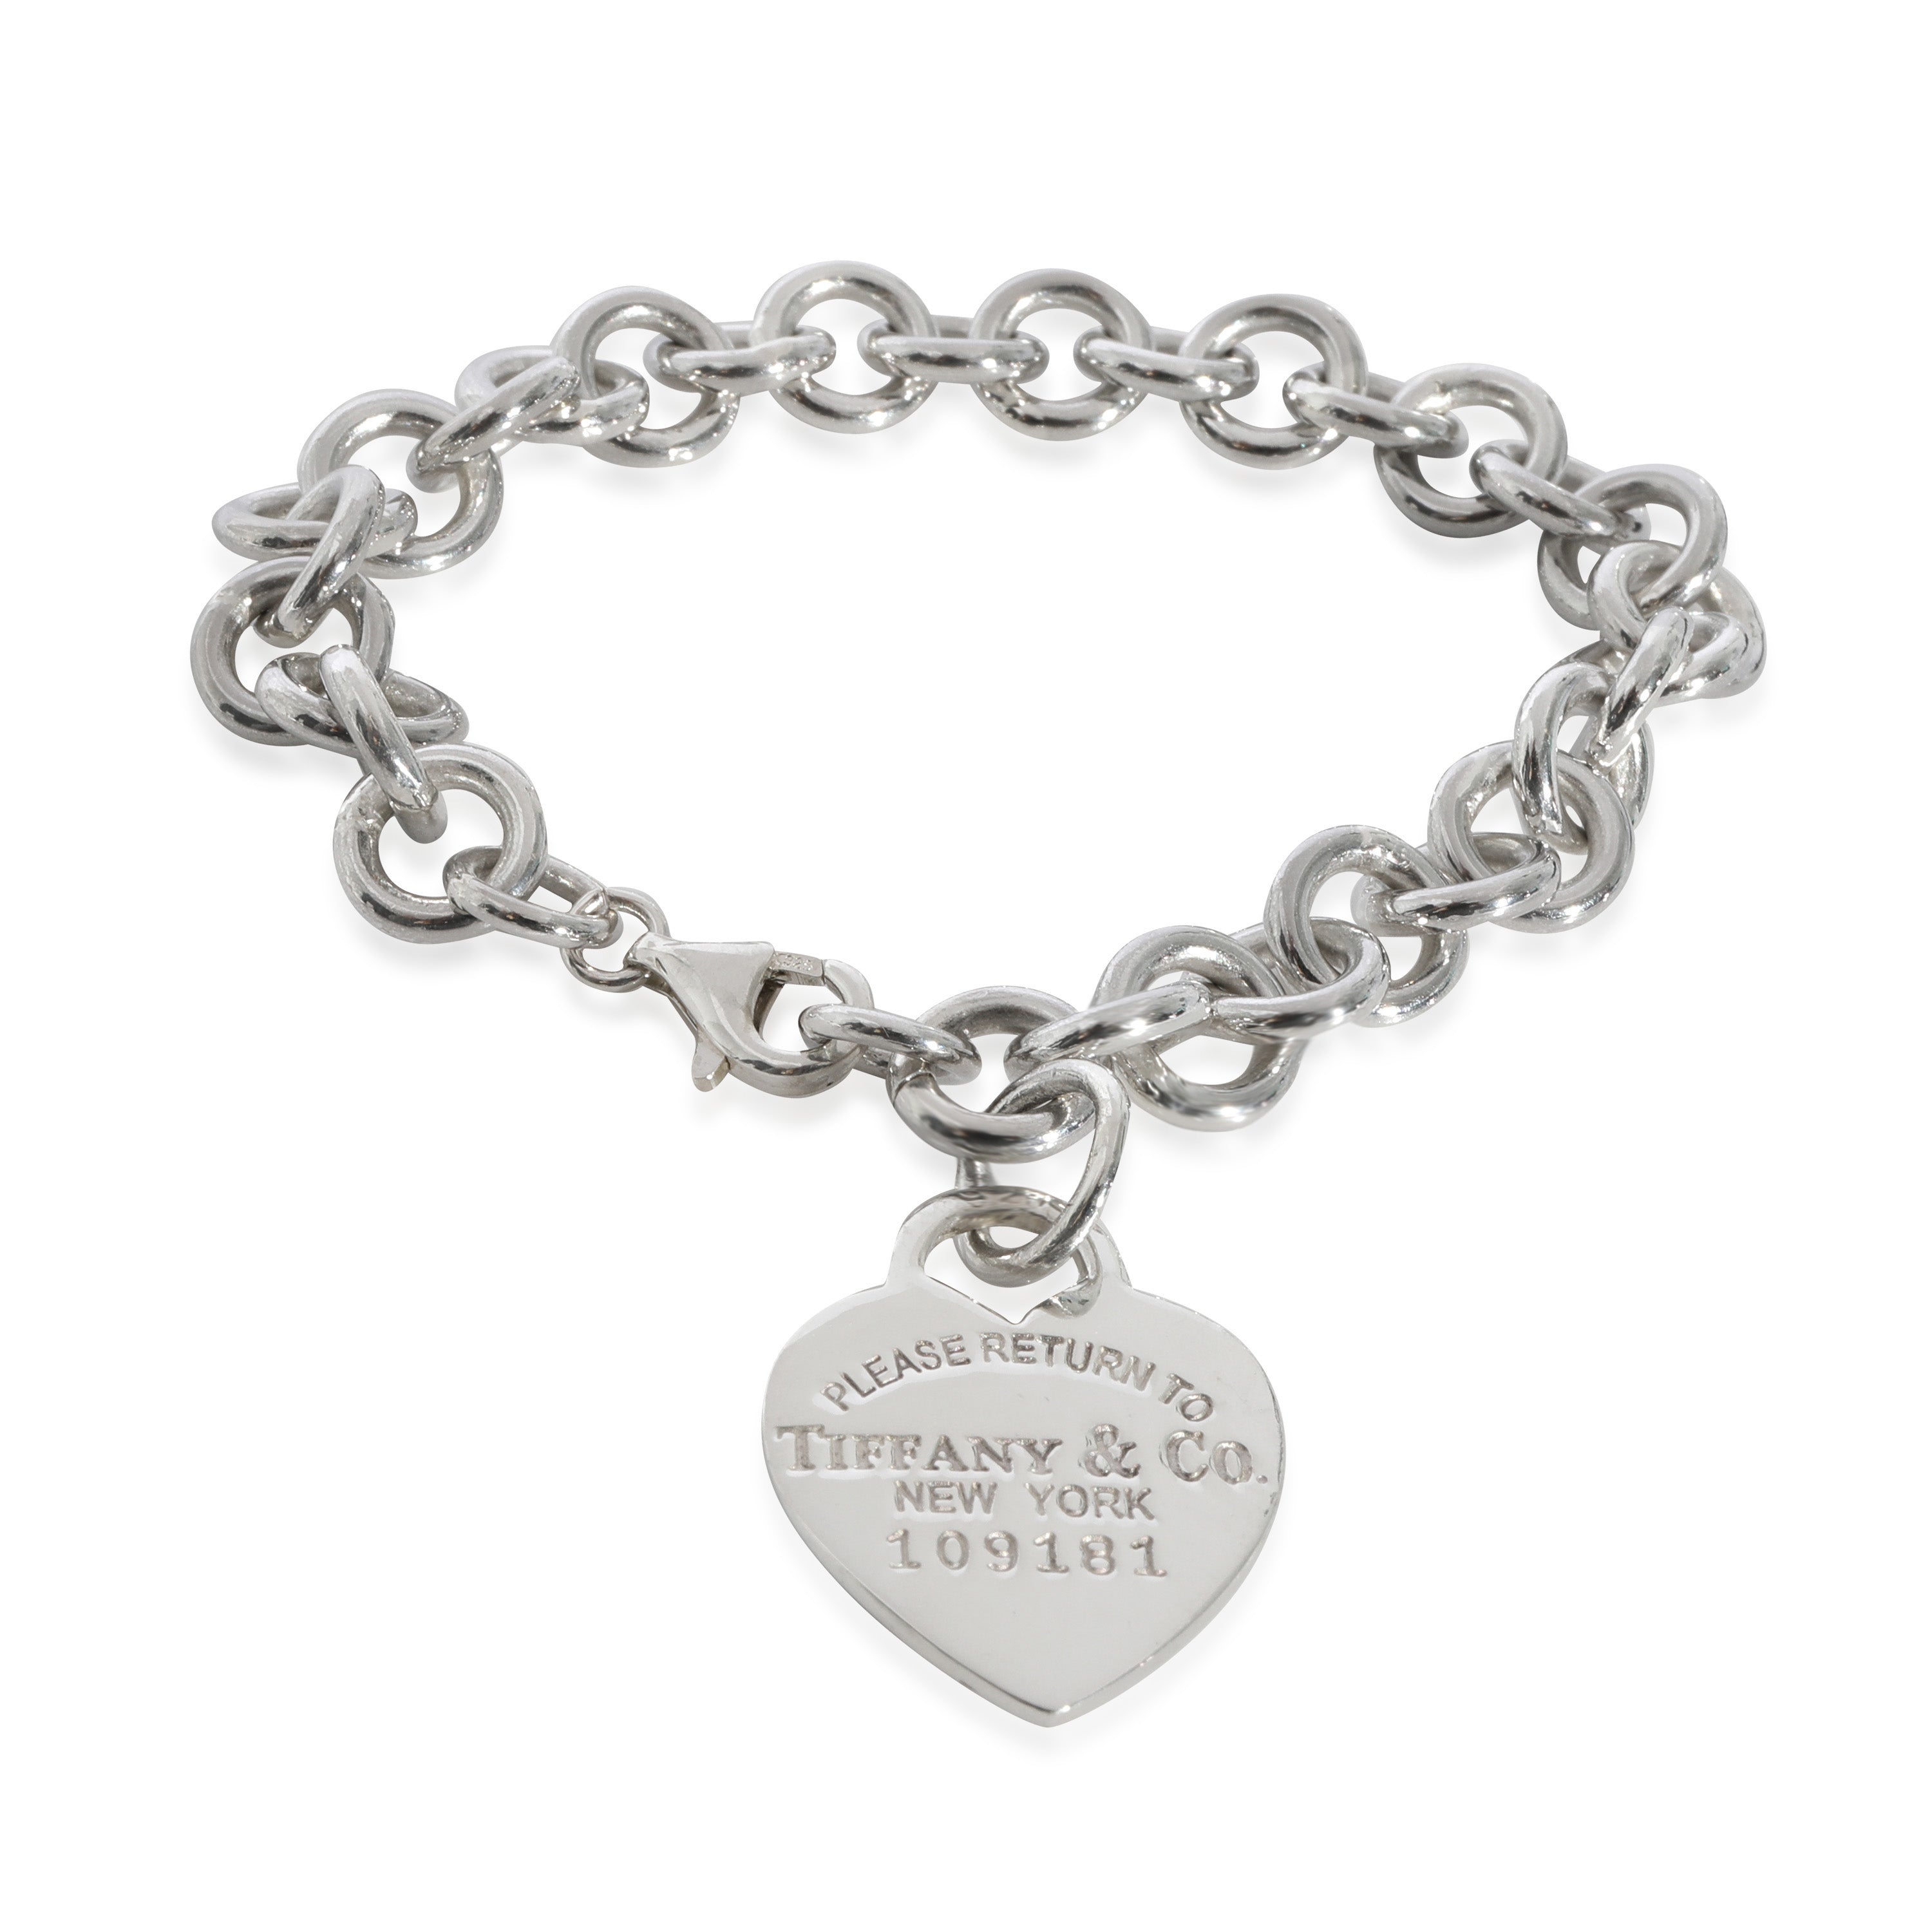 Tiffany & Co. Return To Tiffany Heart Tag Bracelet in Sterling Silver